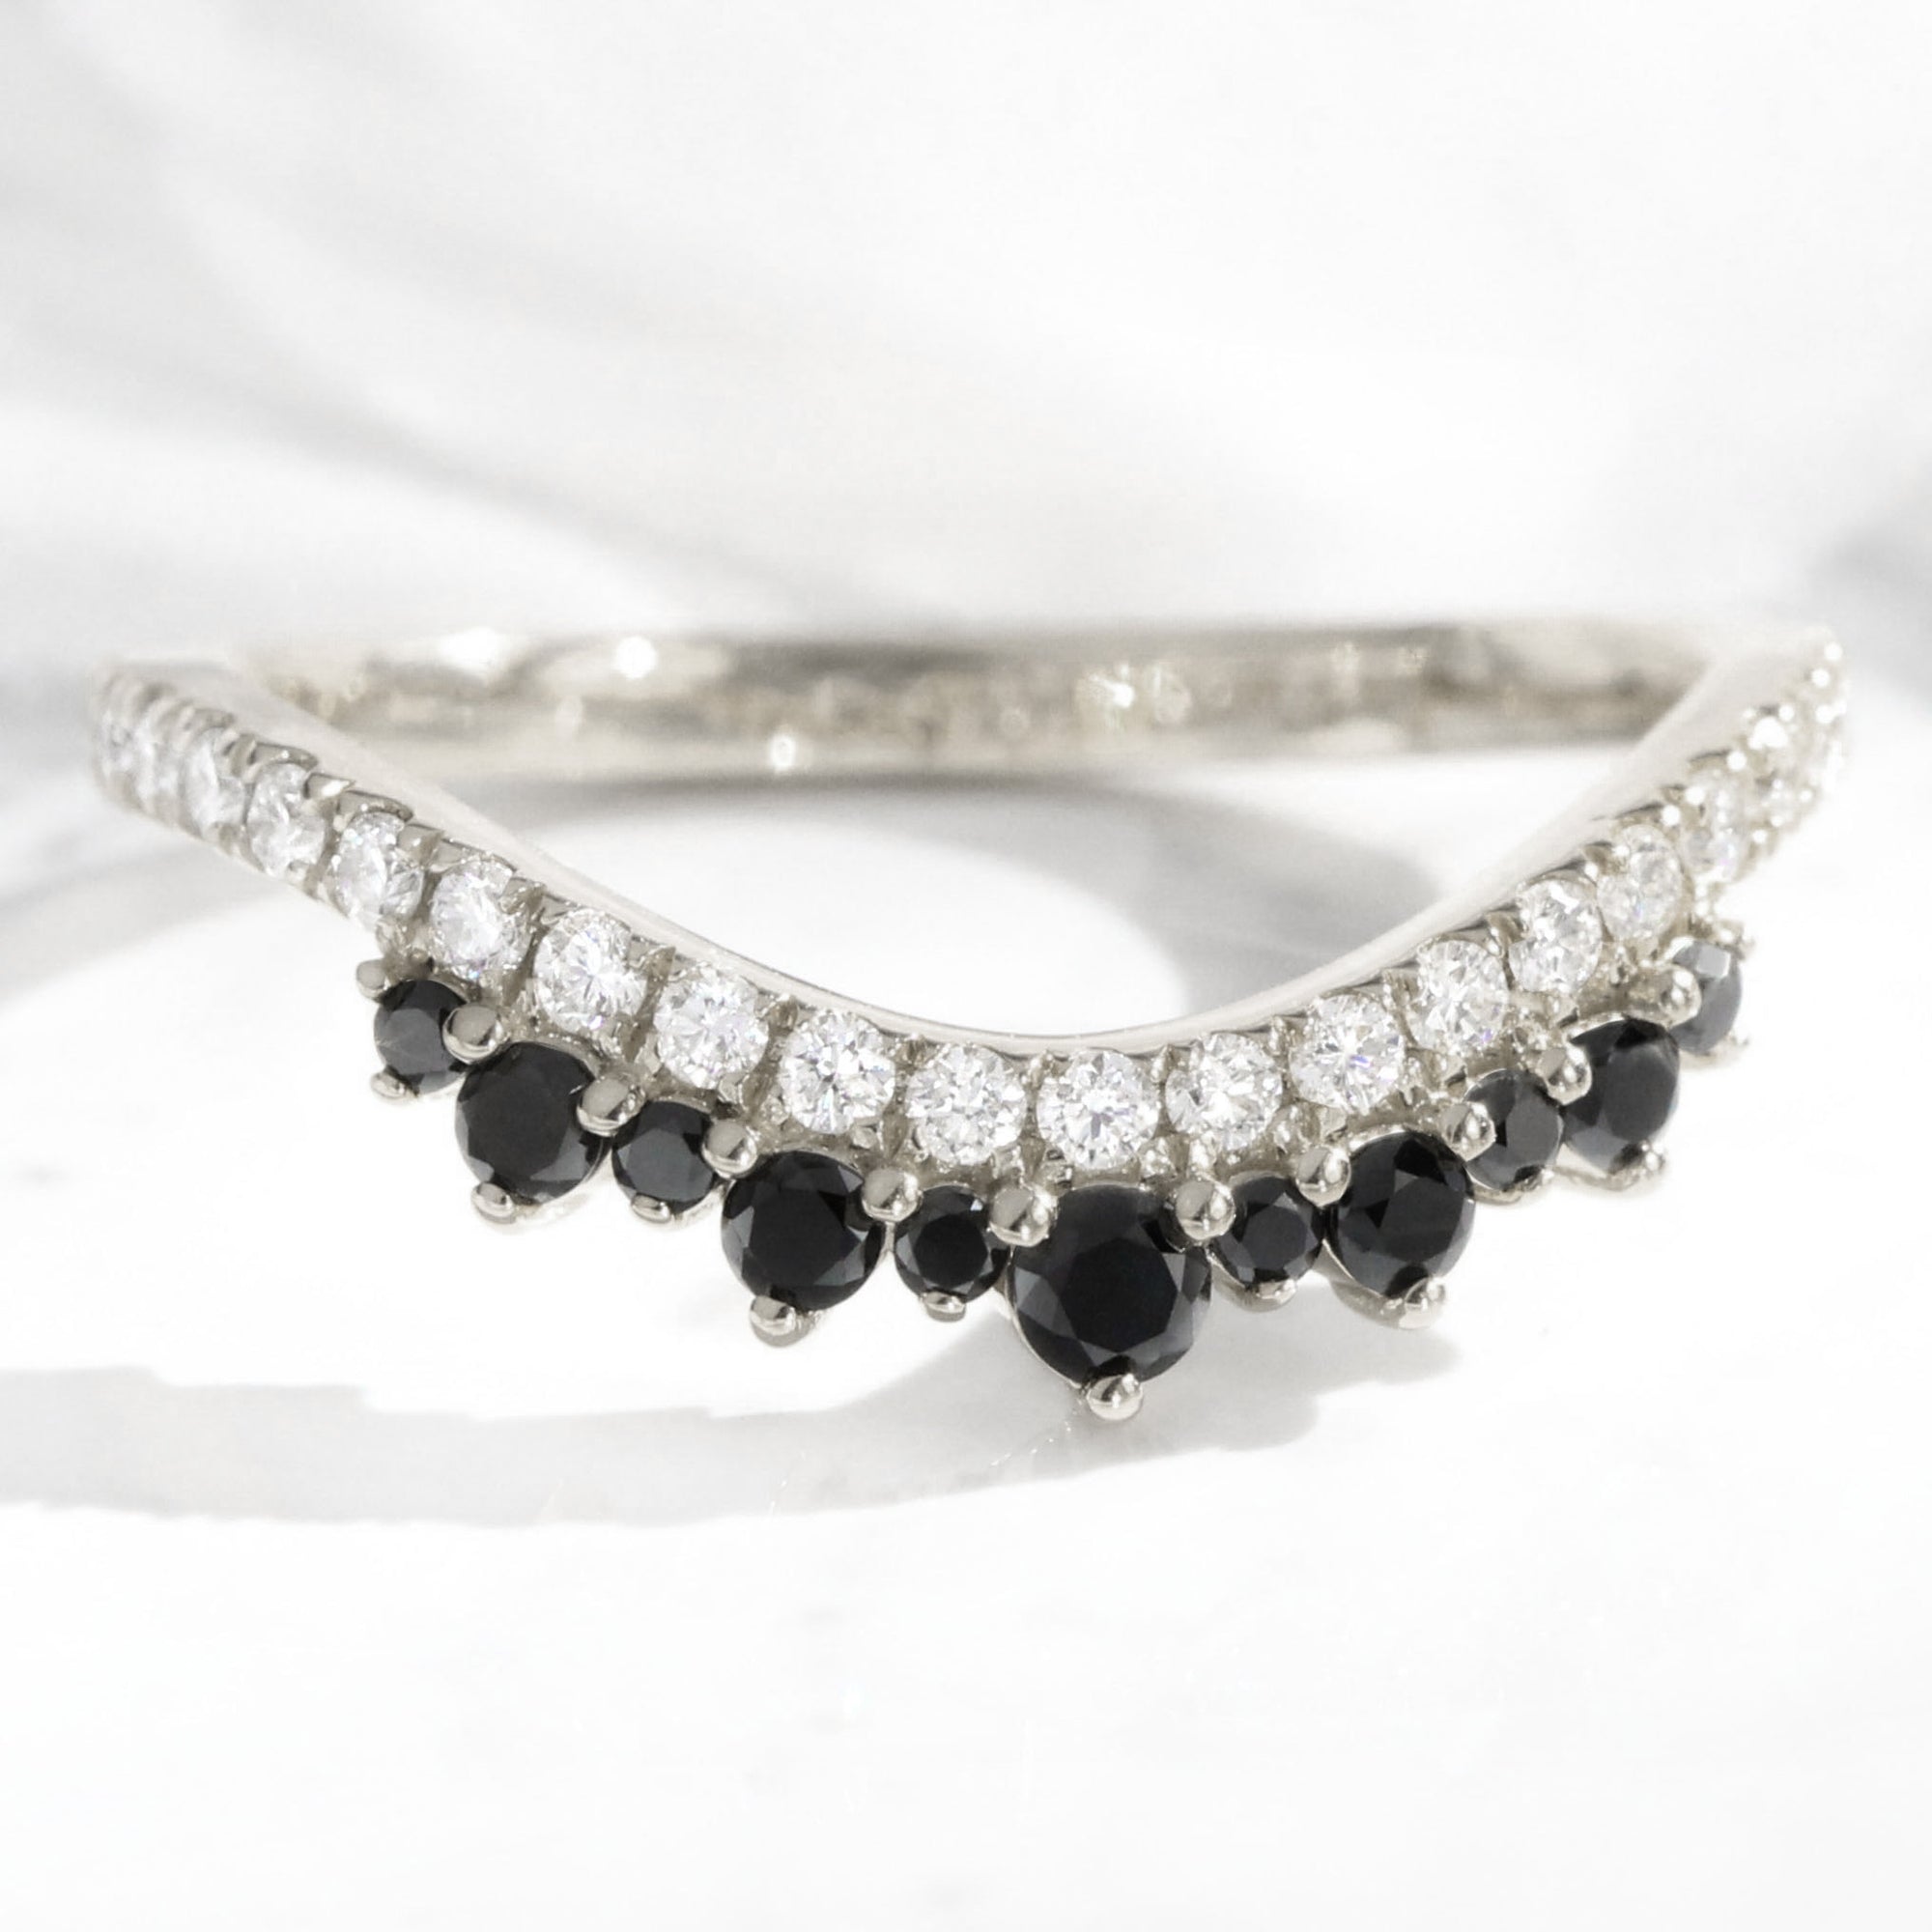 White and black diamond wedding ring white gold curved crown diamond band la more design jewelry